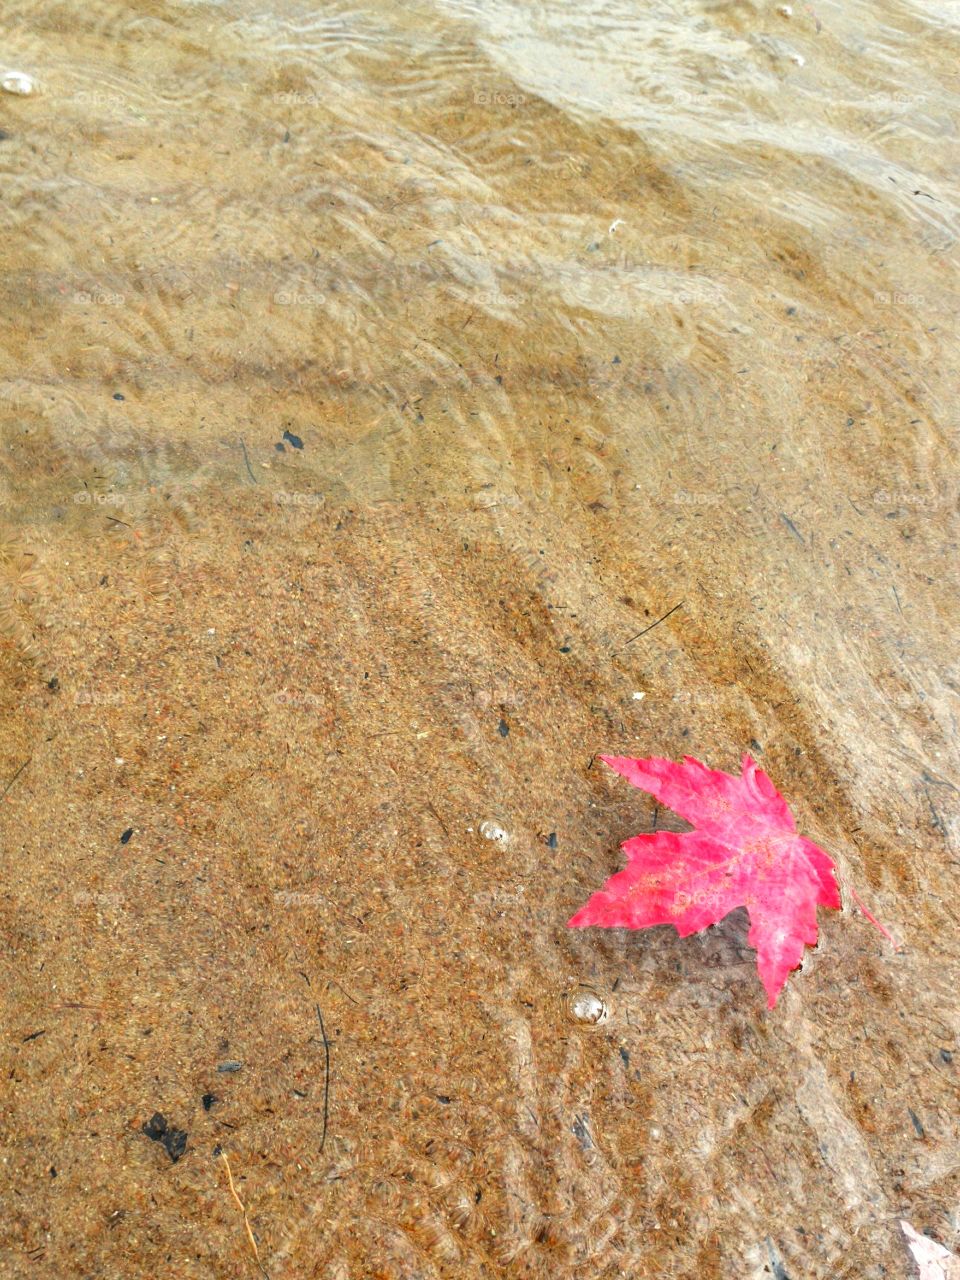 maple leaf floating peacefully.